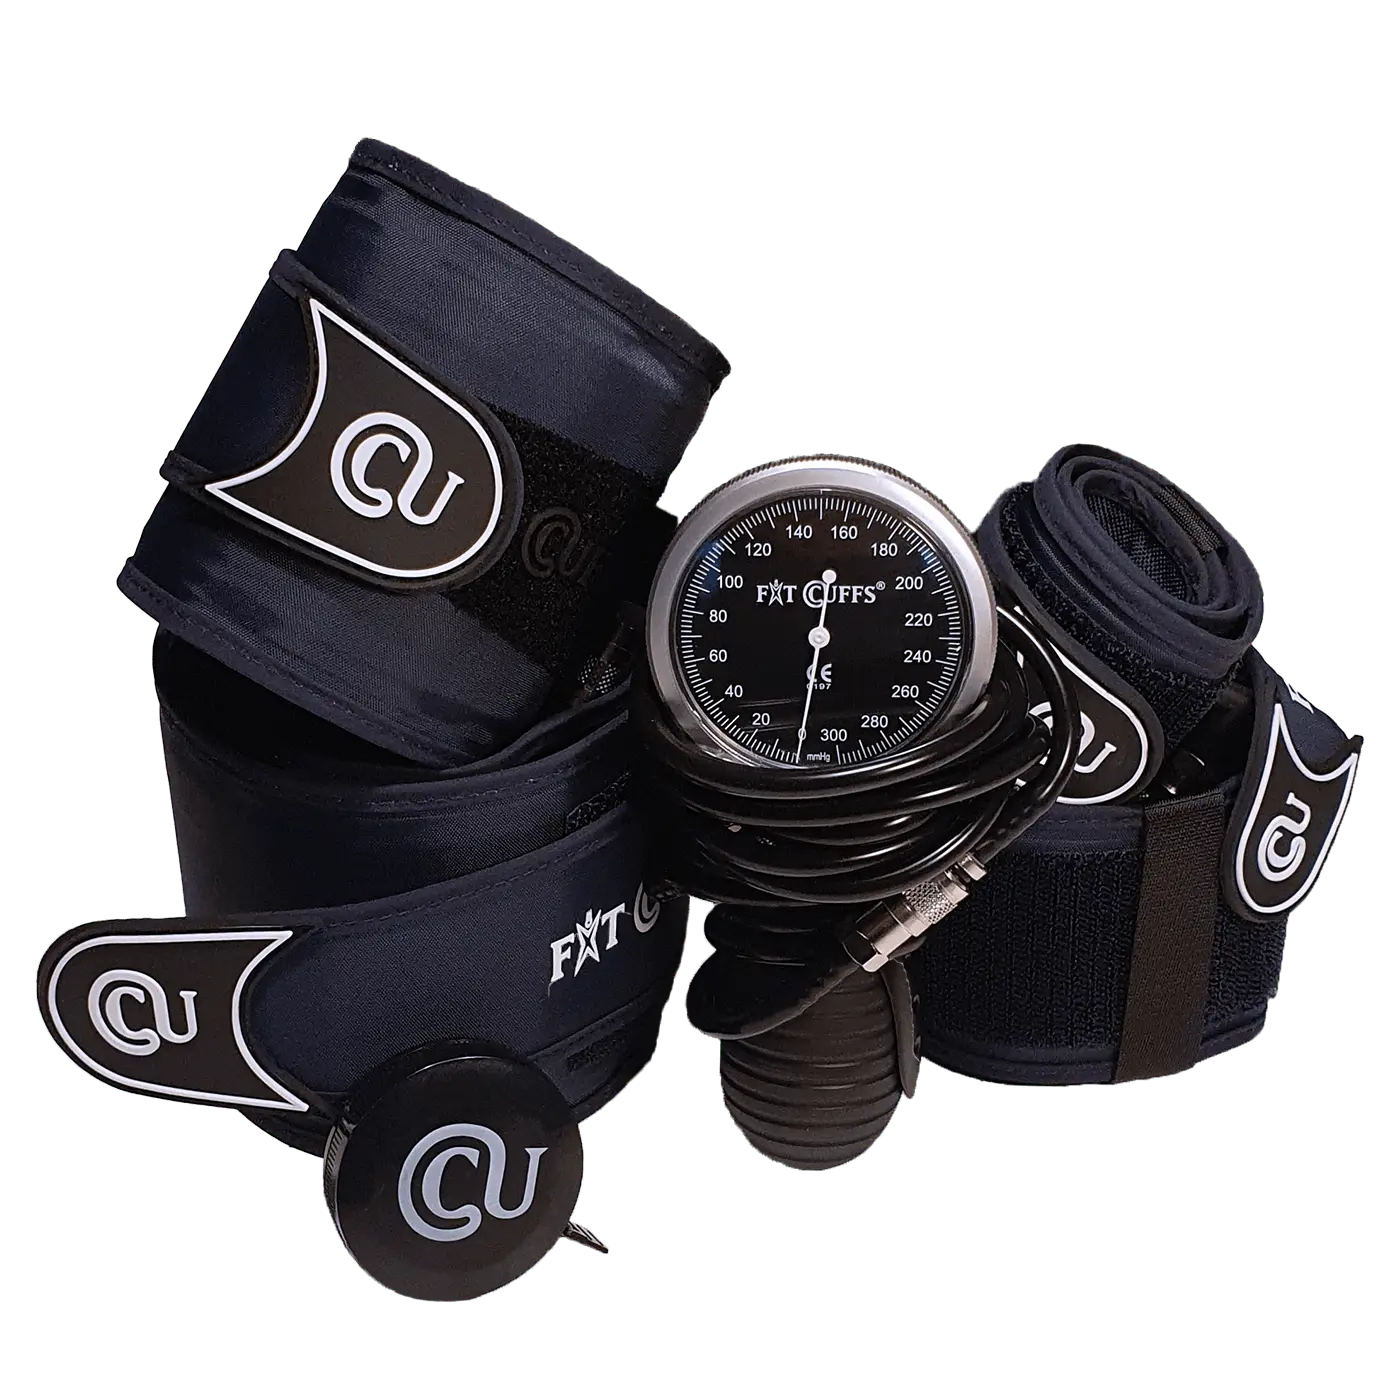 Se Fit Cuffs - Arm Cuff V3.1 - Black hos Fitcuffs.com